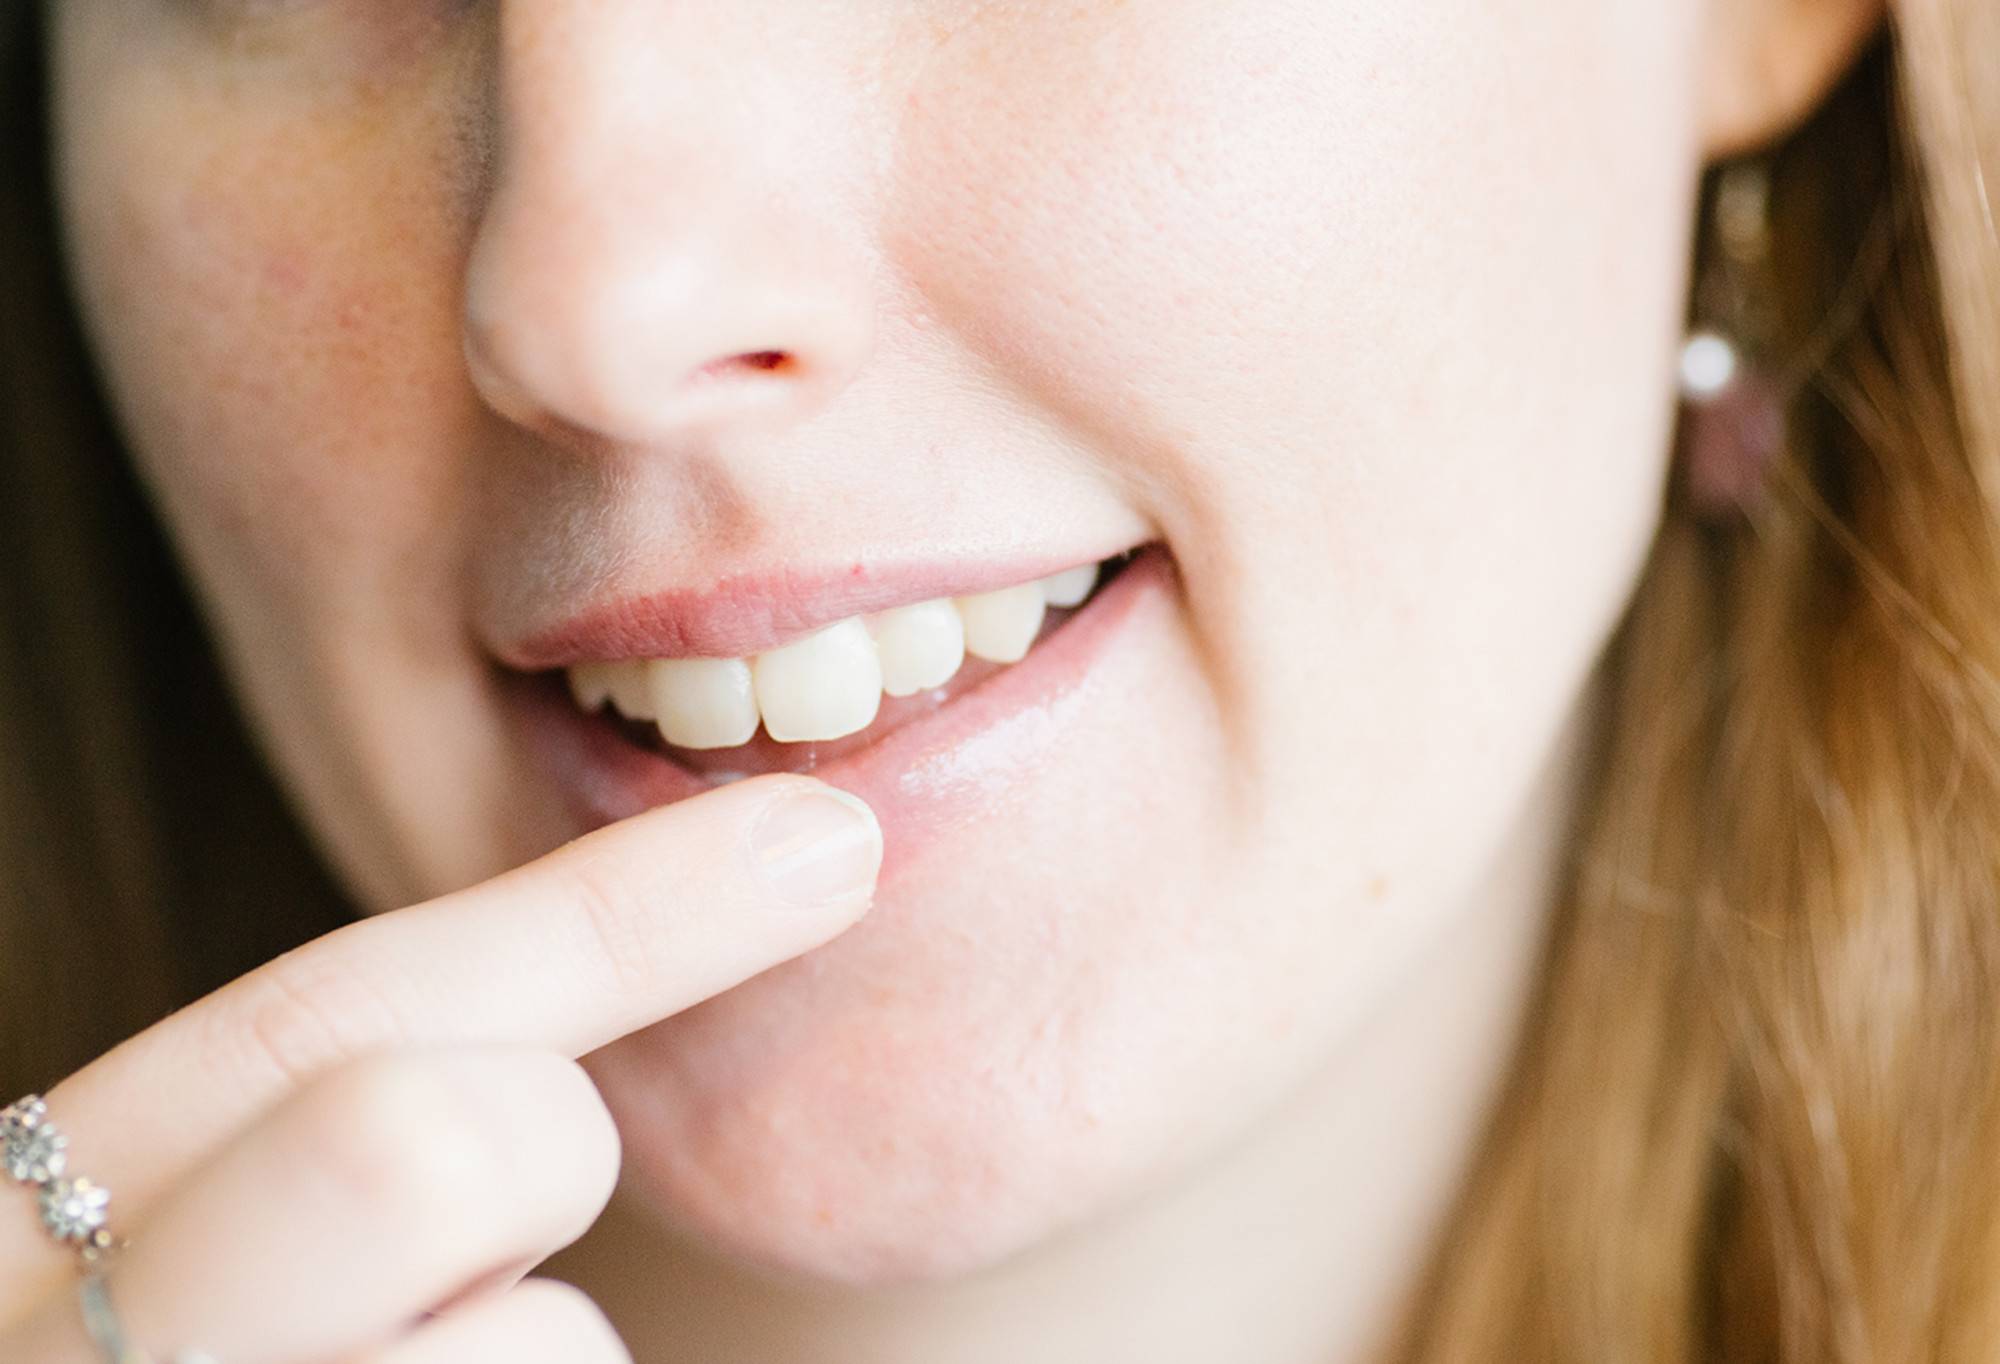 A finger glides Lip Service lip balm onto soft, shiny, smiling lips.